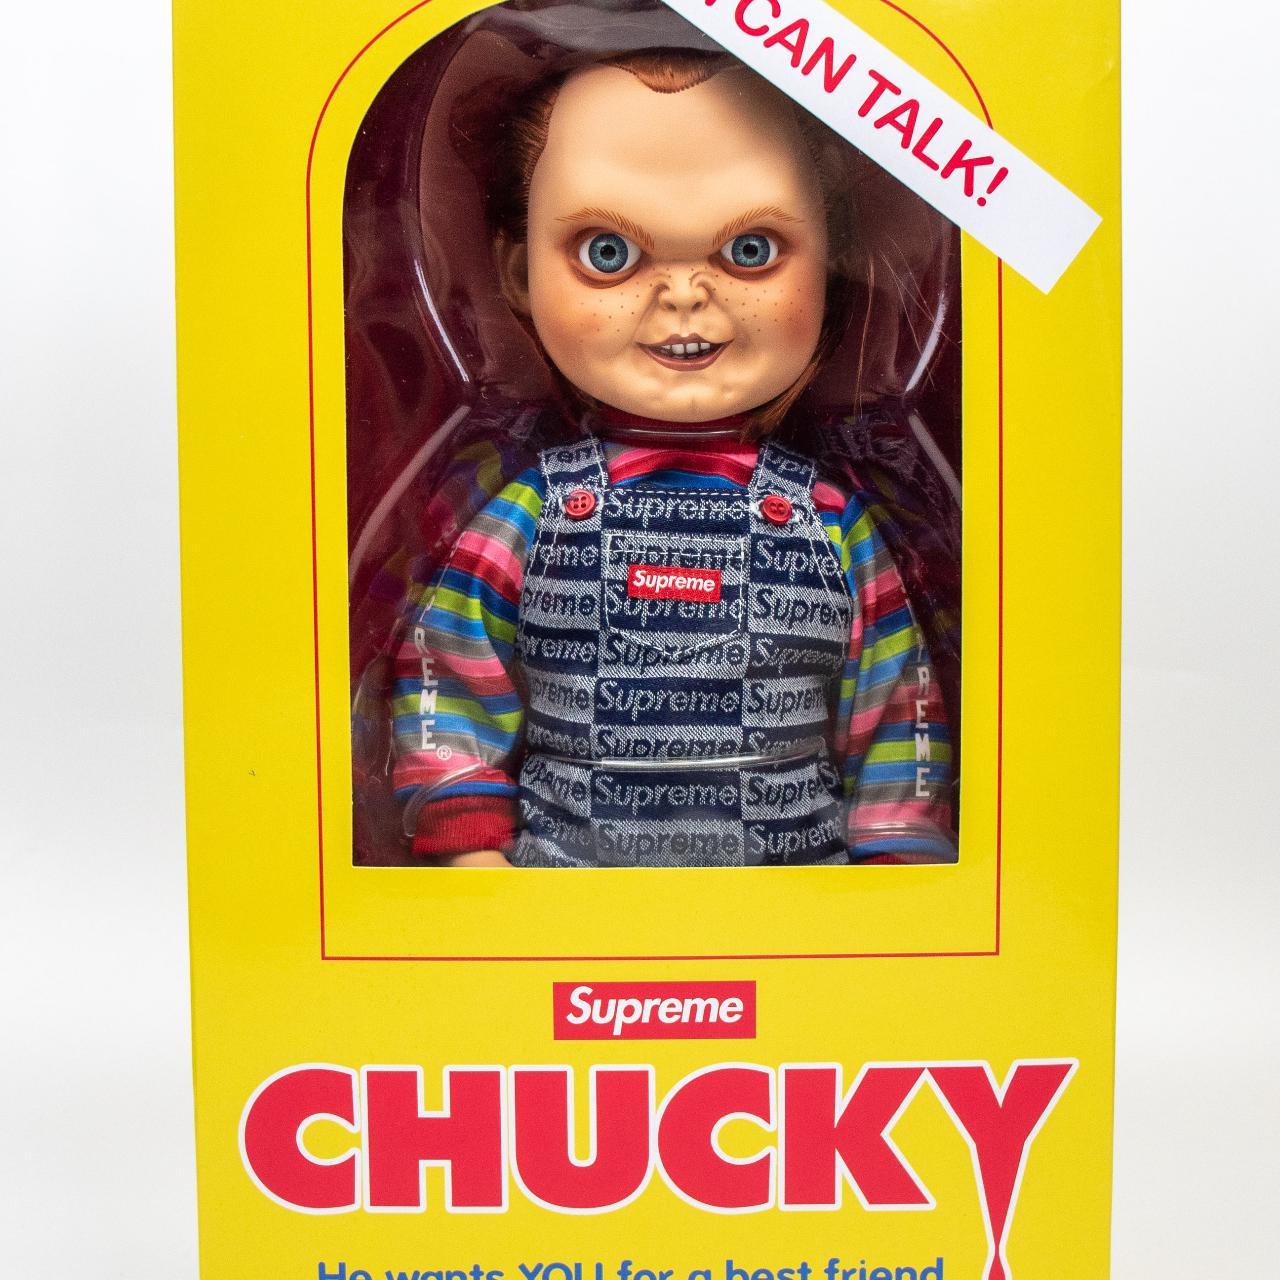 🔥SUPREME CHUCKY DOLL🔥, Brand new Supreme Chucky doll